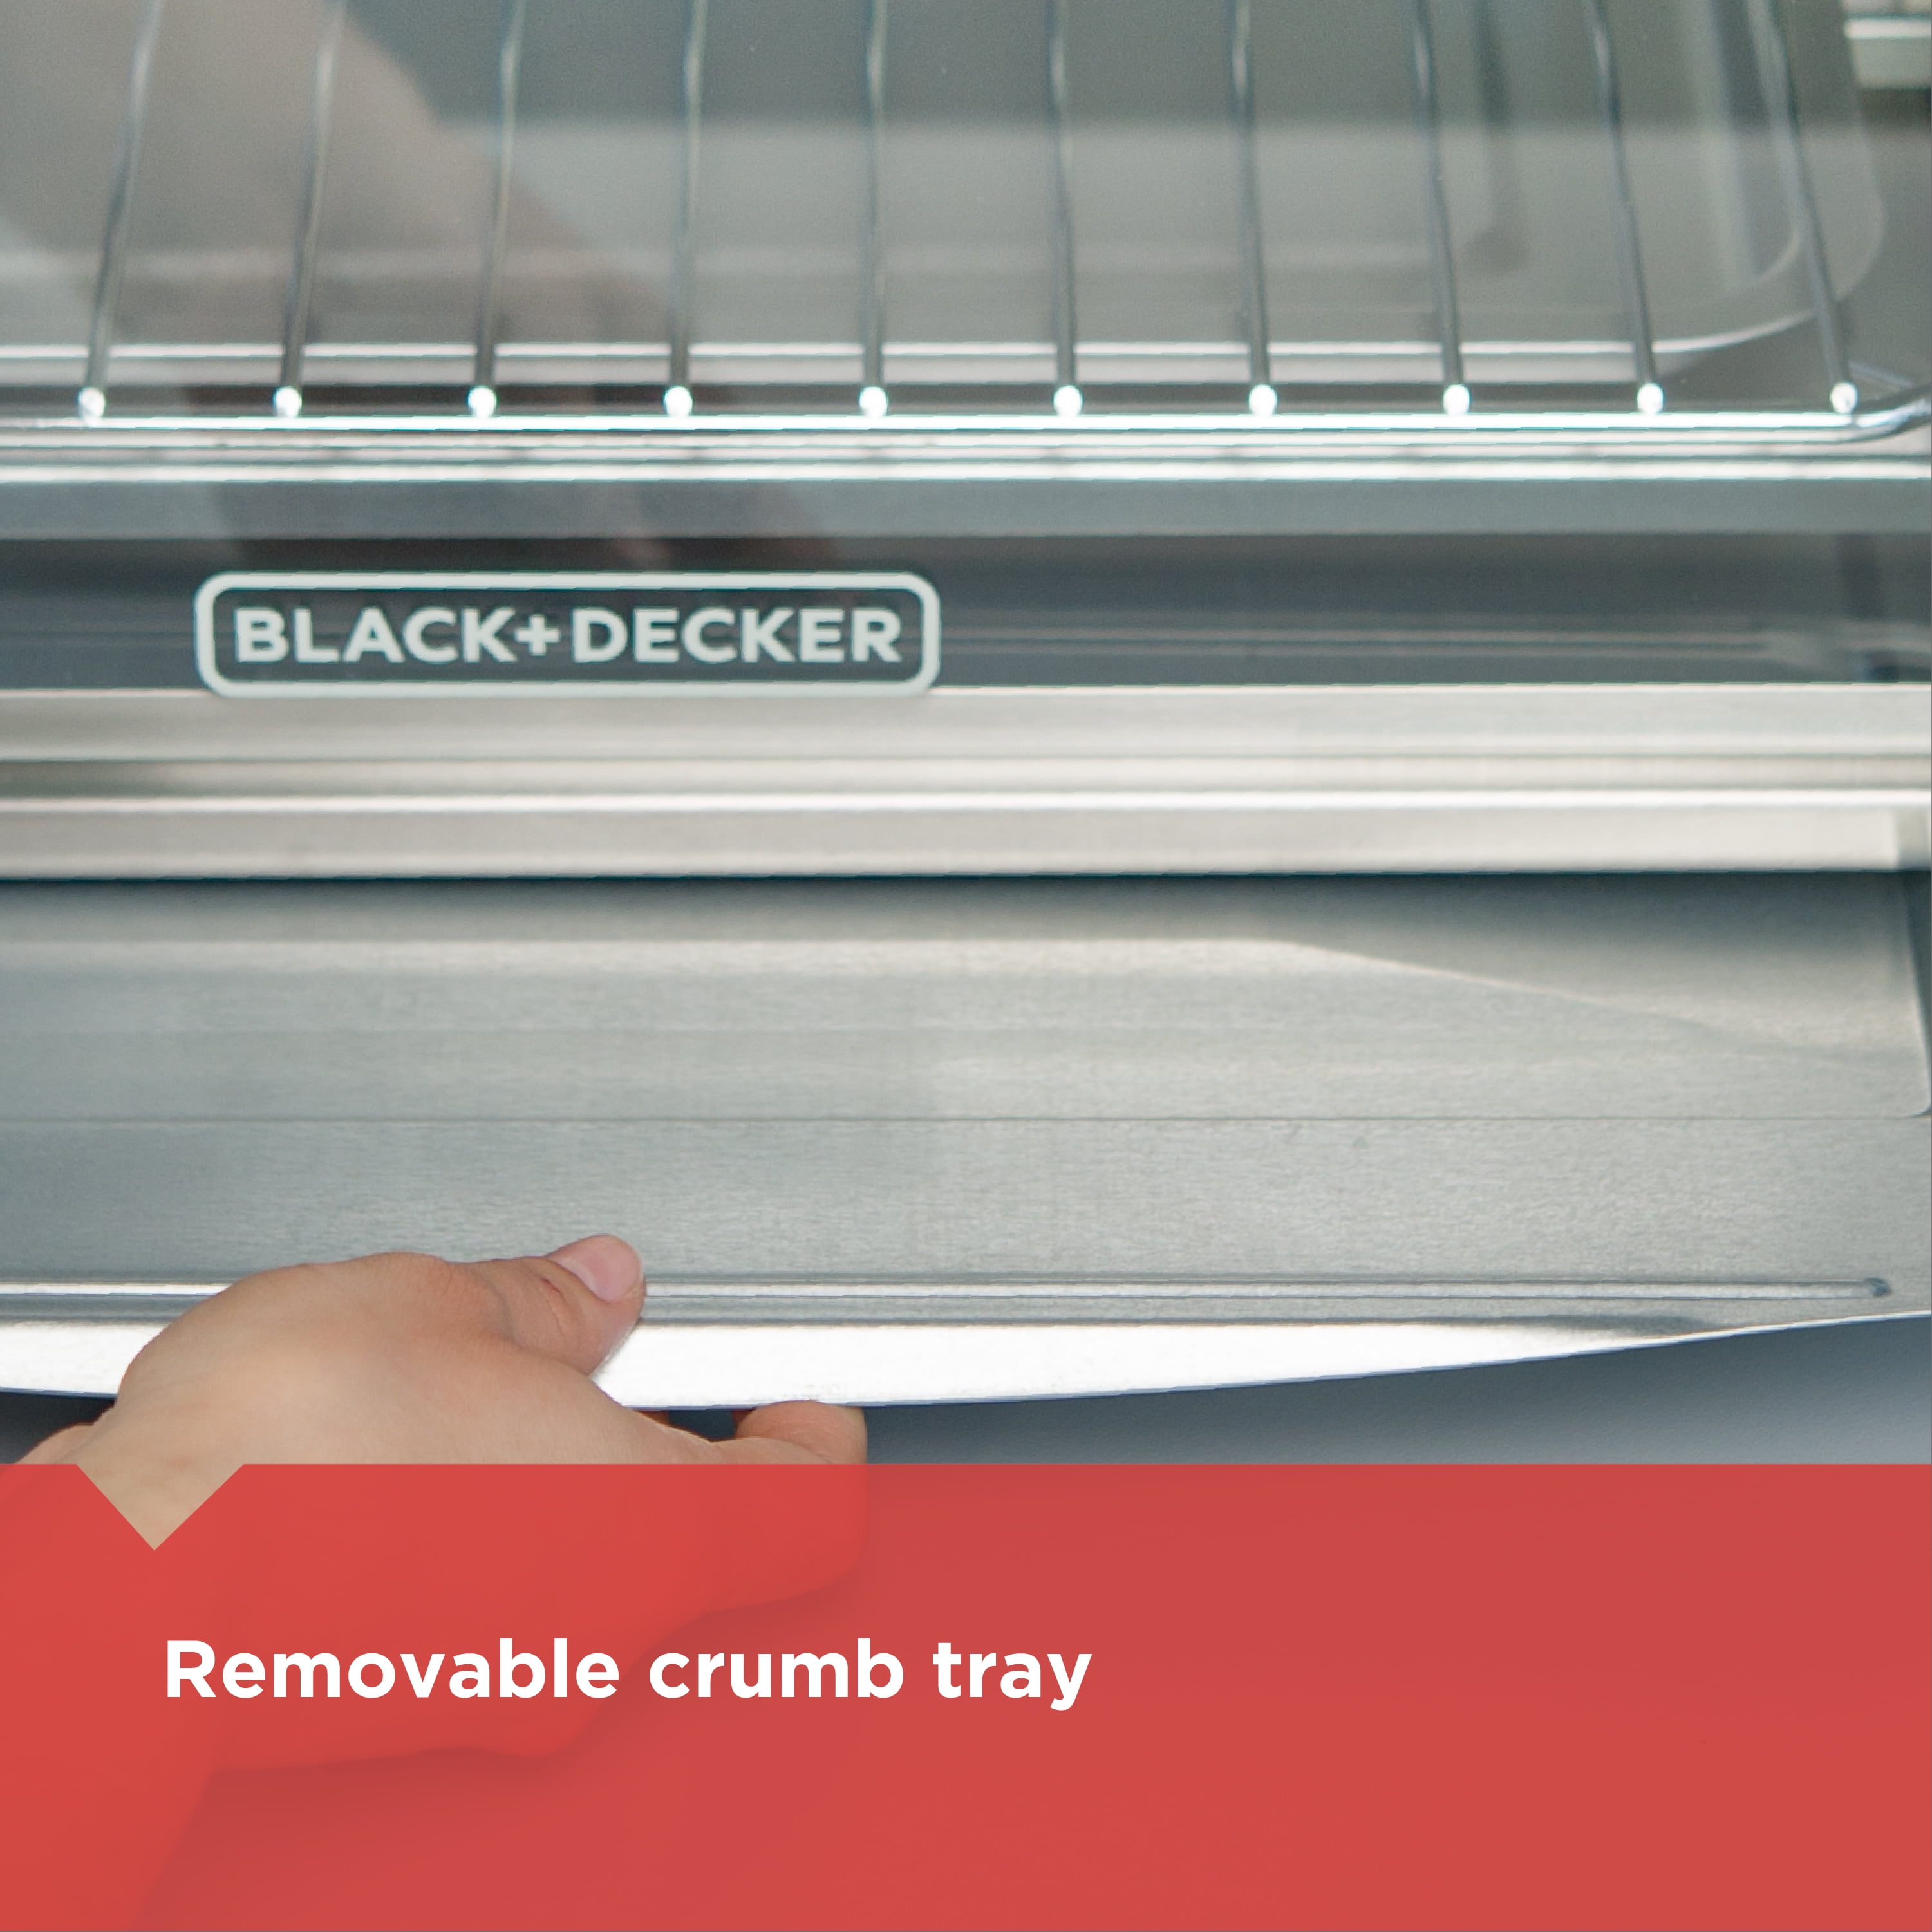 BLACK+DECKER 8-Slice Digital Toaster Oven, Stainless Steel, TO3290XSD 